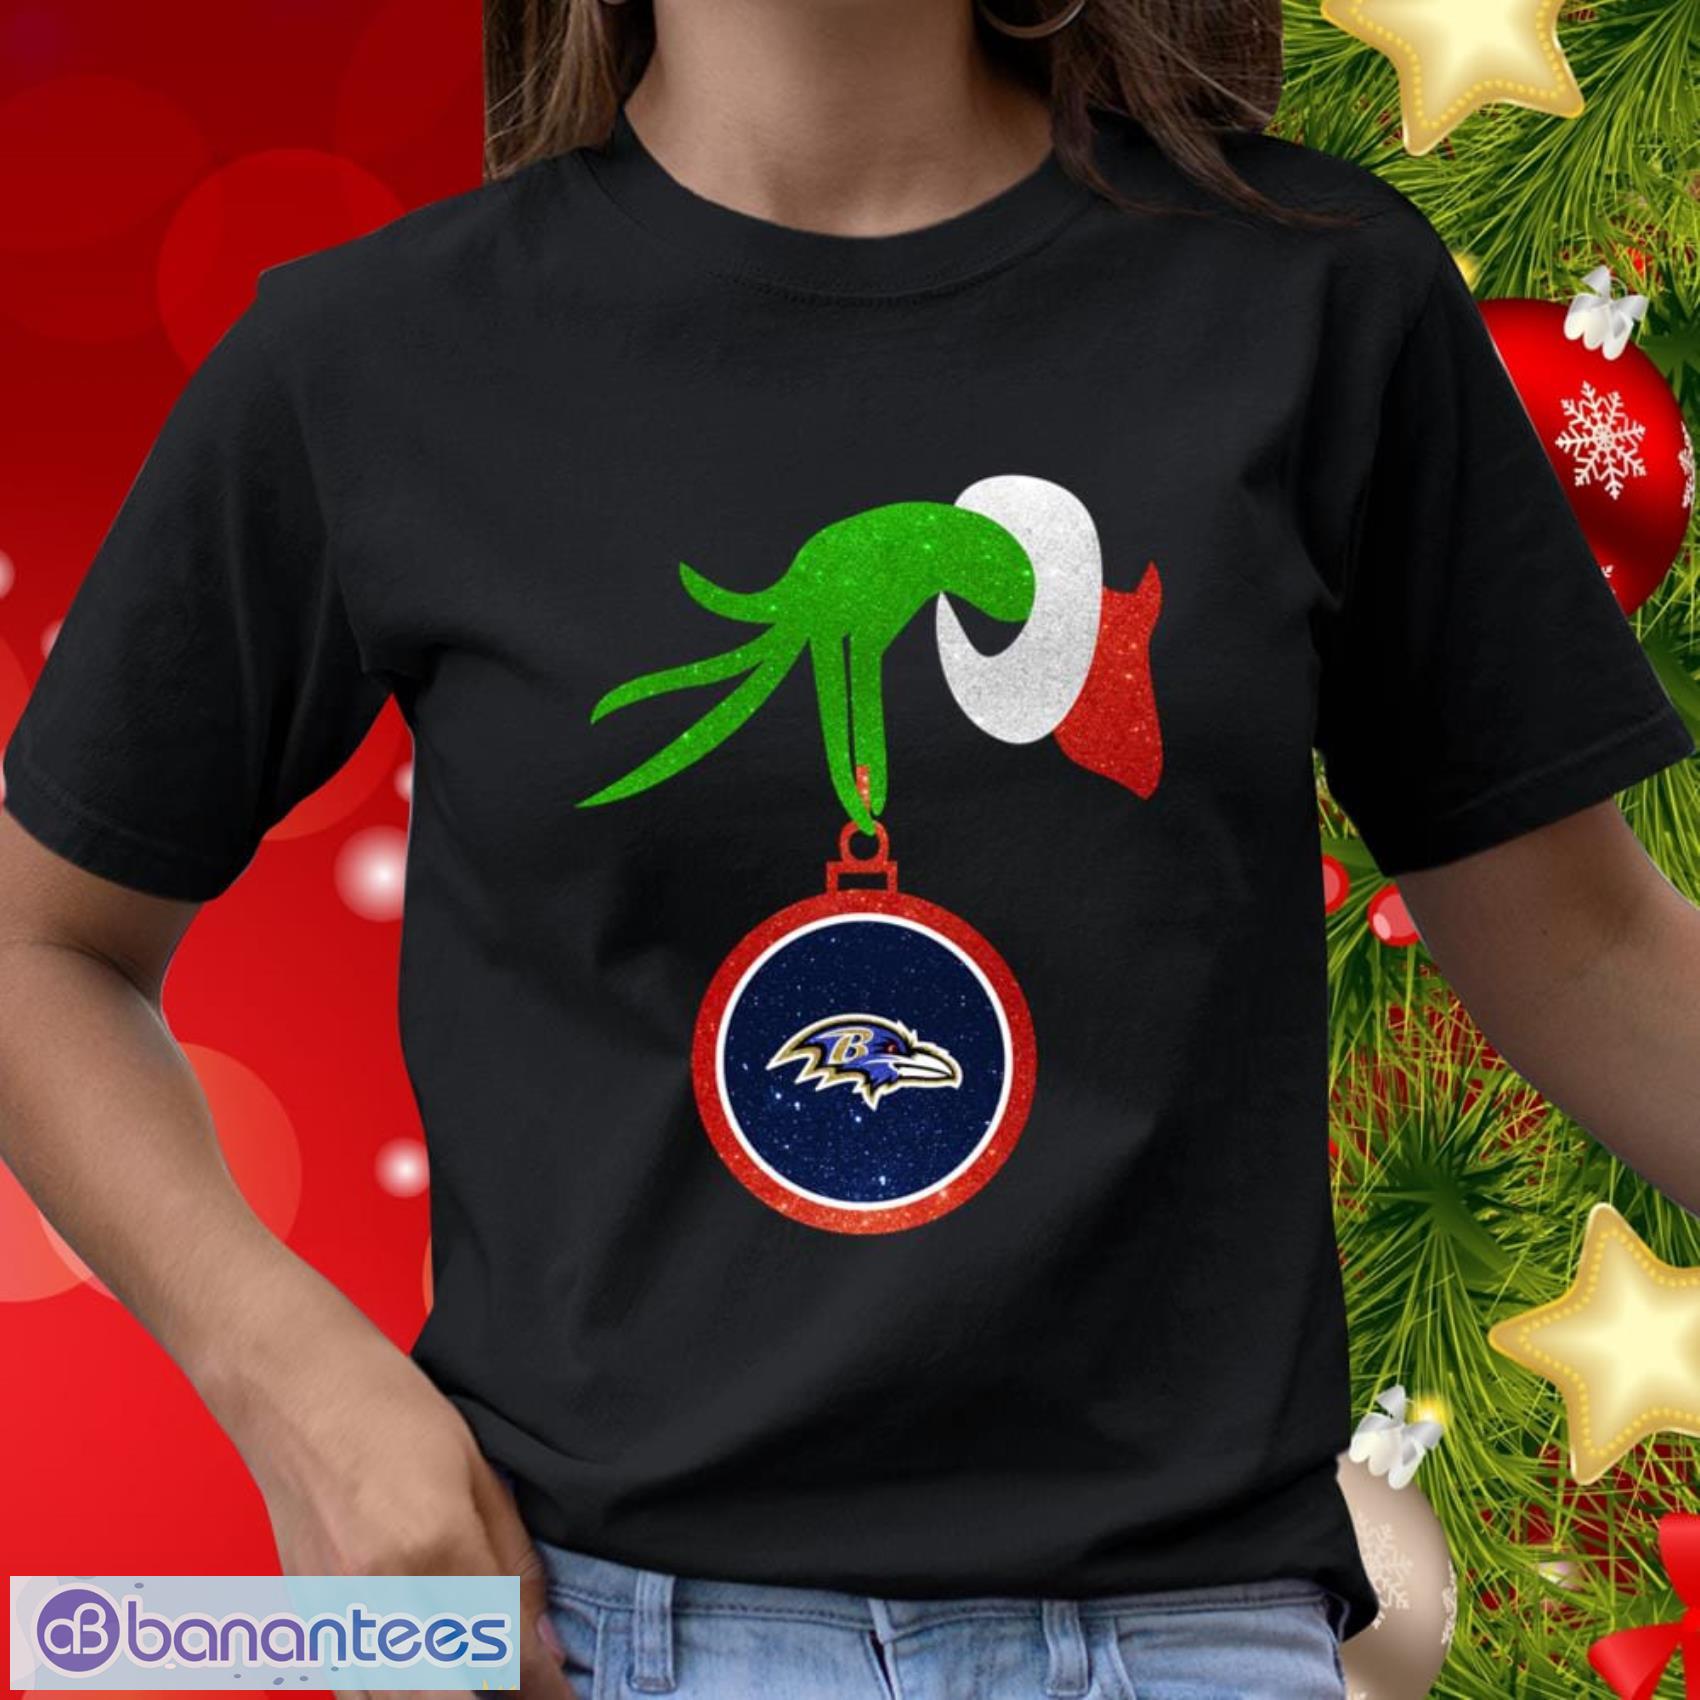 Baltimore Ravens Grinch Merry Christmas NFL Football Gift Fr Fans T Shirt - Baltimore Ravens Grinch Merry Christmas NFL Football T Shirt_2